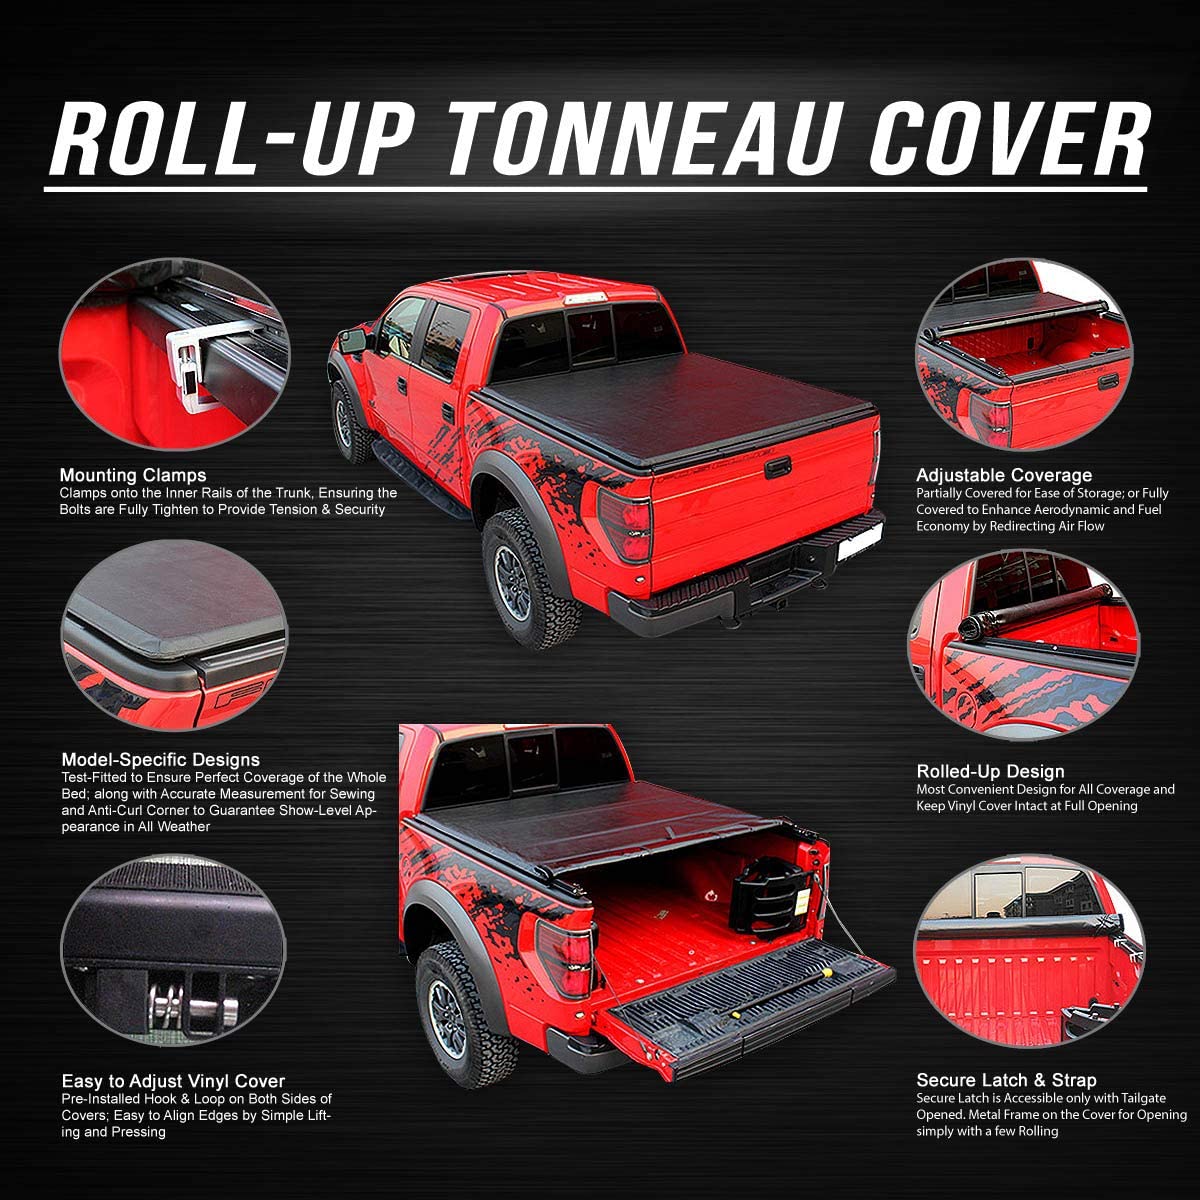 Truck Bed Soft Vinyl Roll-Up Tonneau Cover Compatible with Dodge Ram 5.7Ft Fleet-side Short Bed , Black 2009 2010 2011 2012 2013 2014 2015 2016 2017 2018